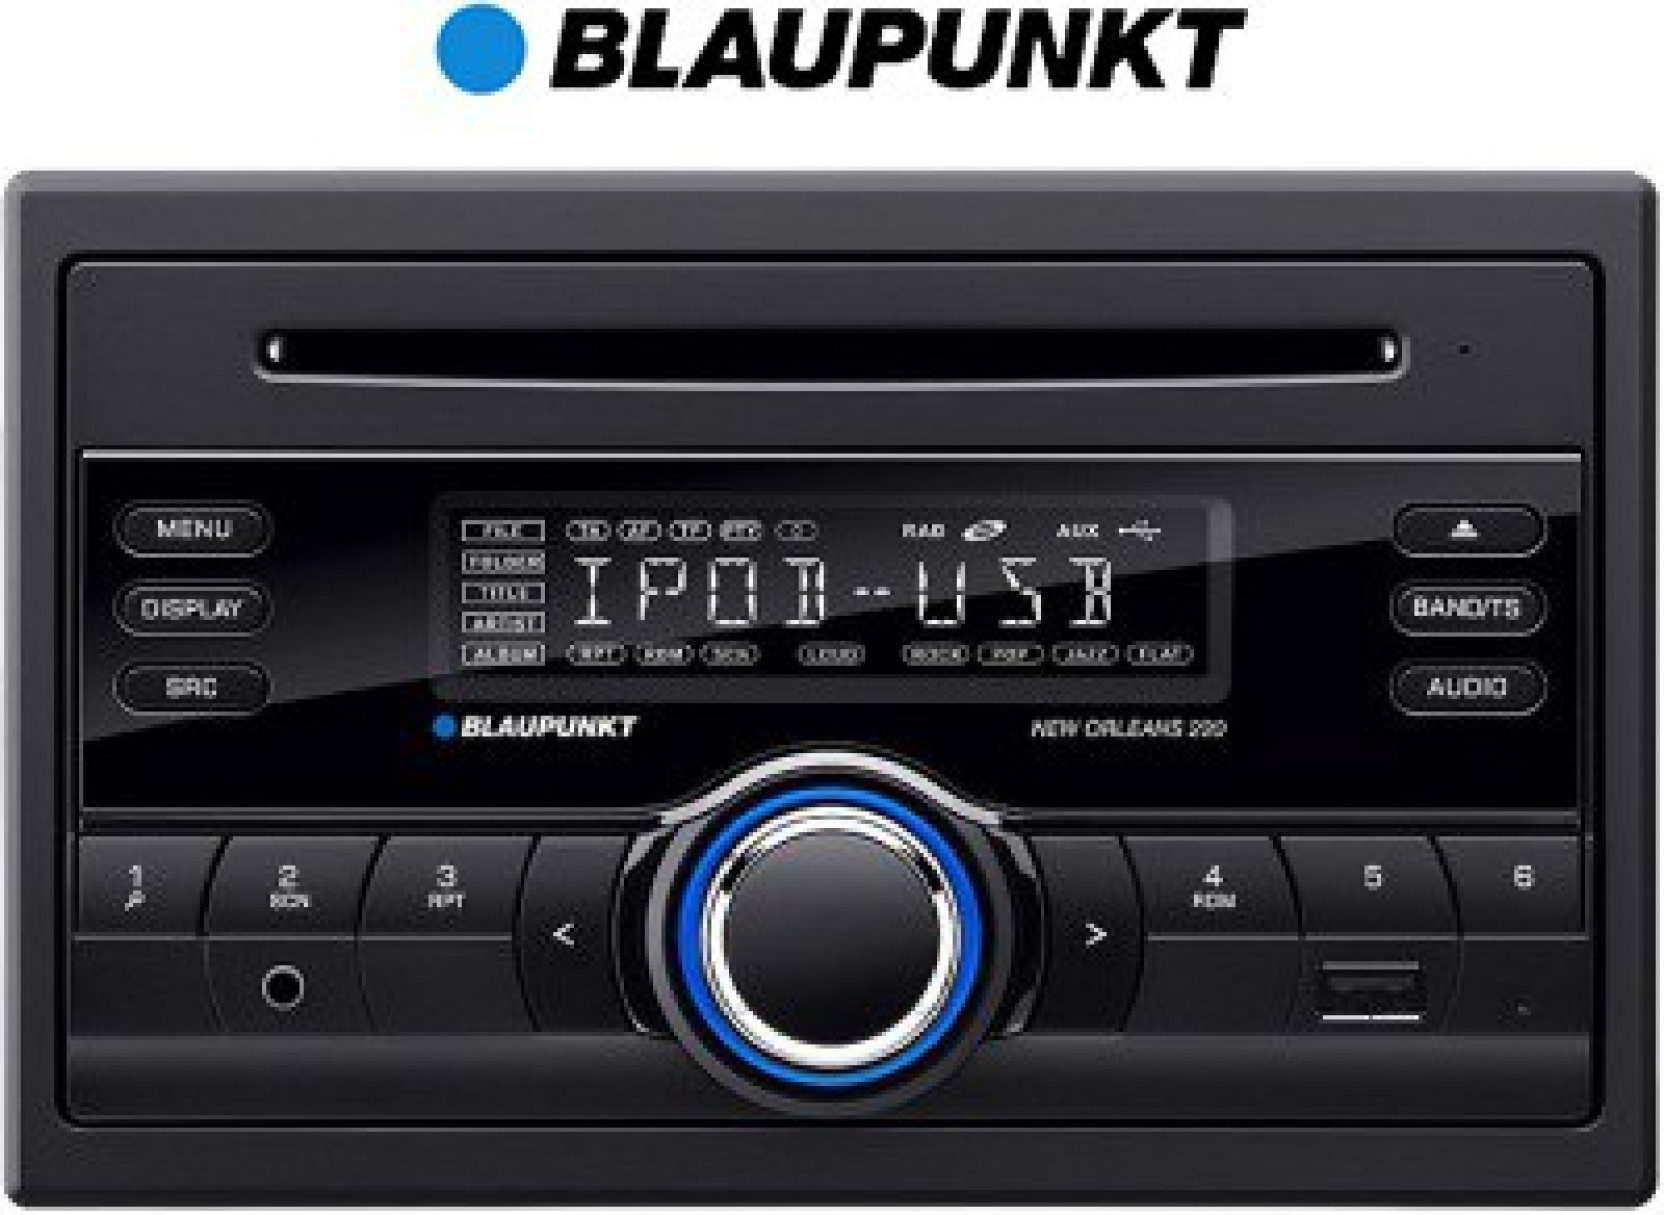 Blaupunkt car stereo information